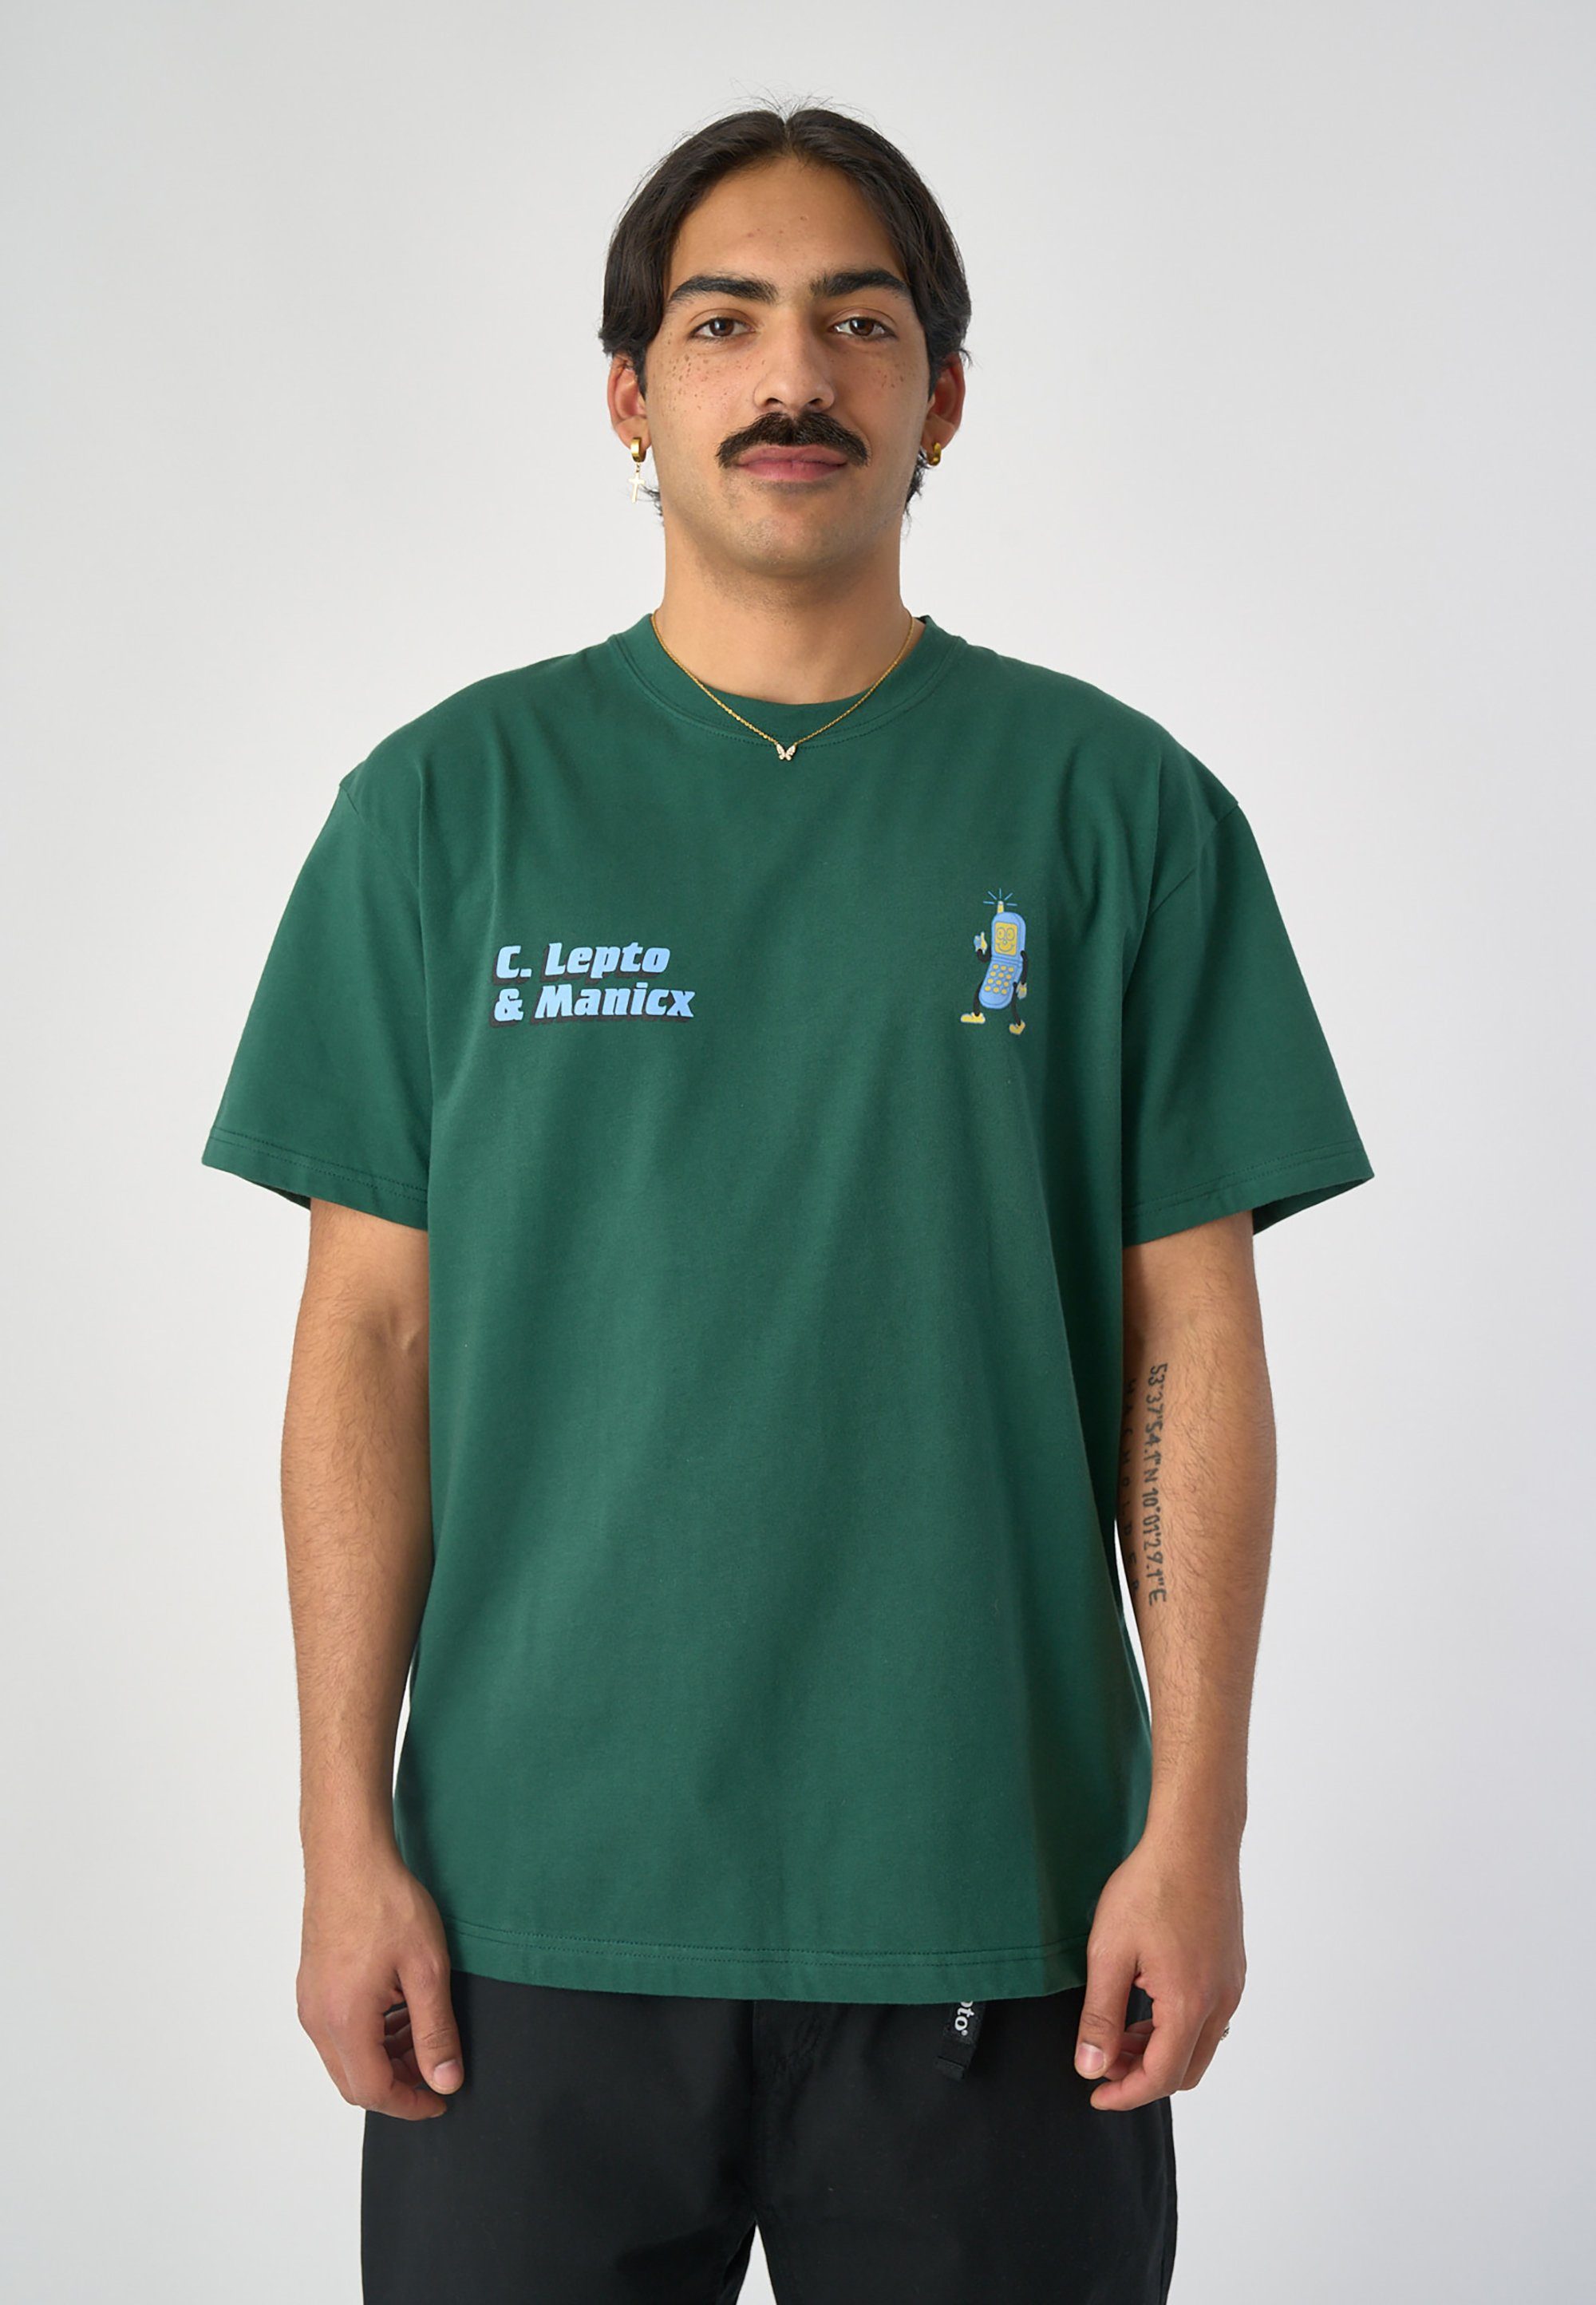 mit Schnitt lockerem grün Profi Cleptomanicx T-Shirt